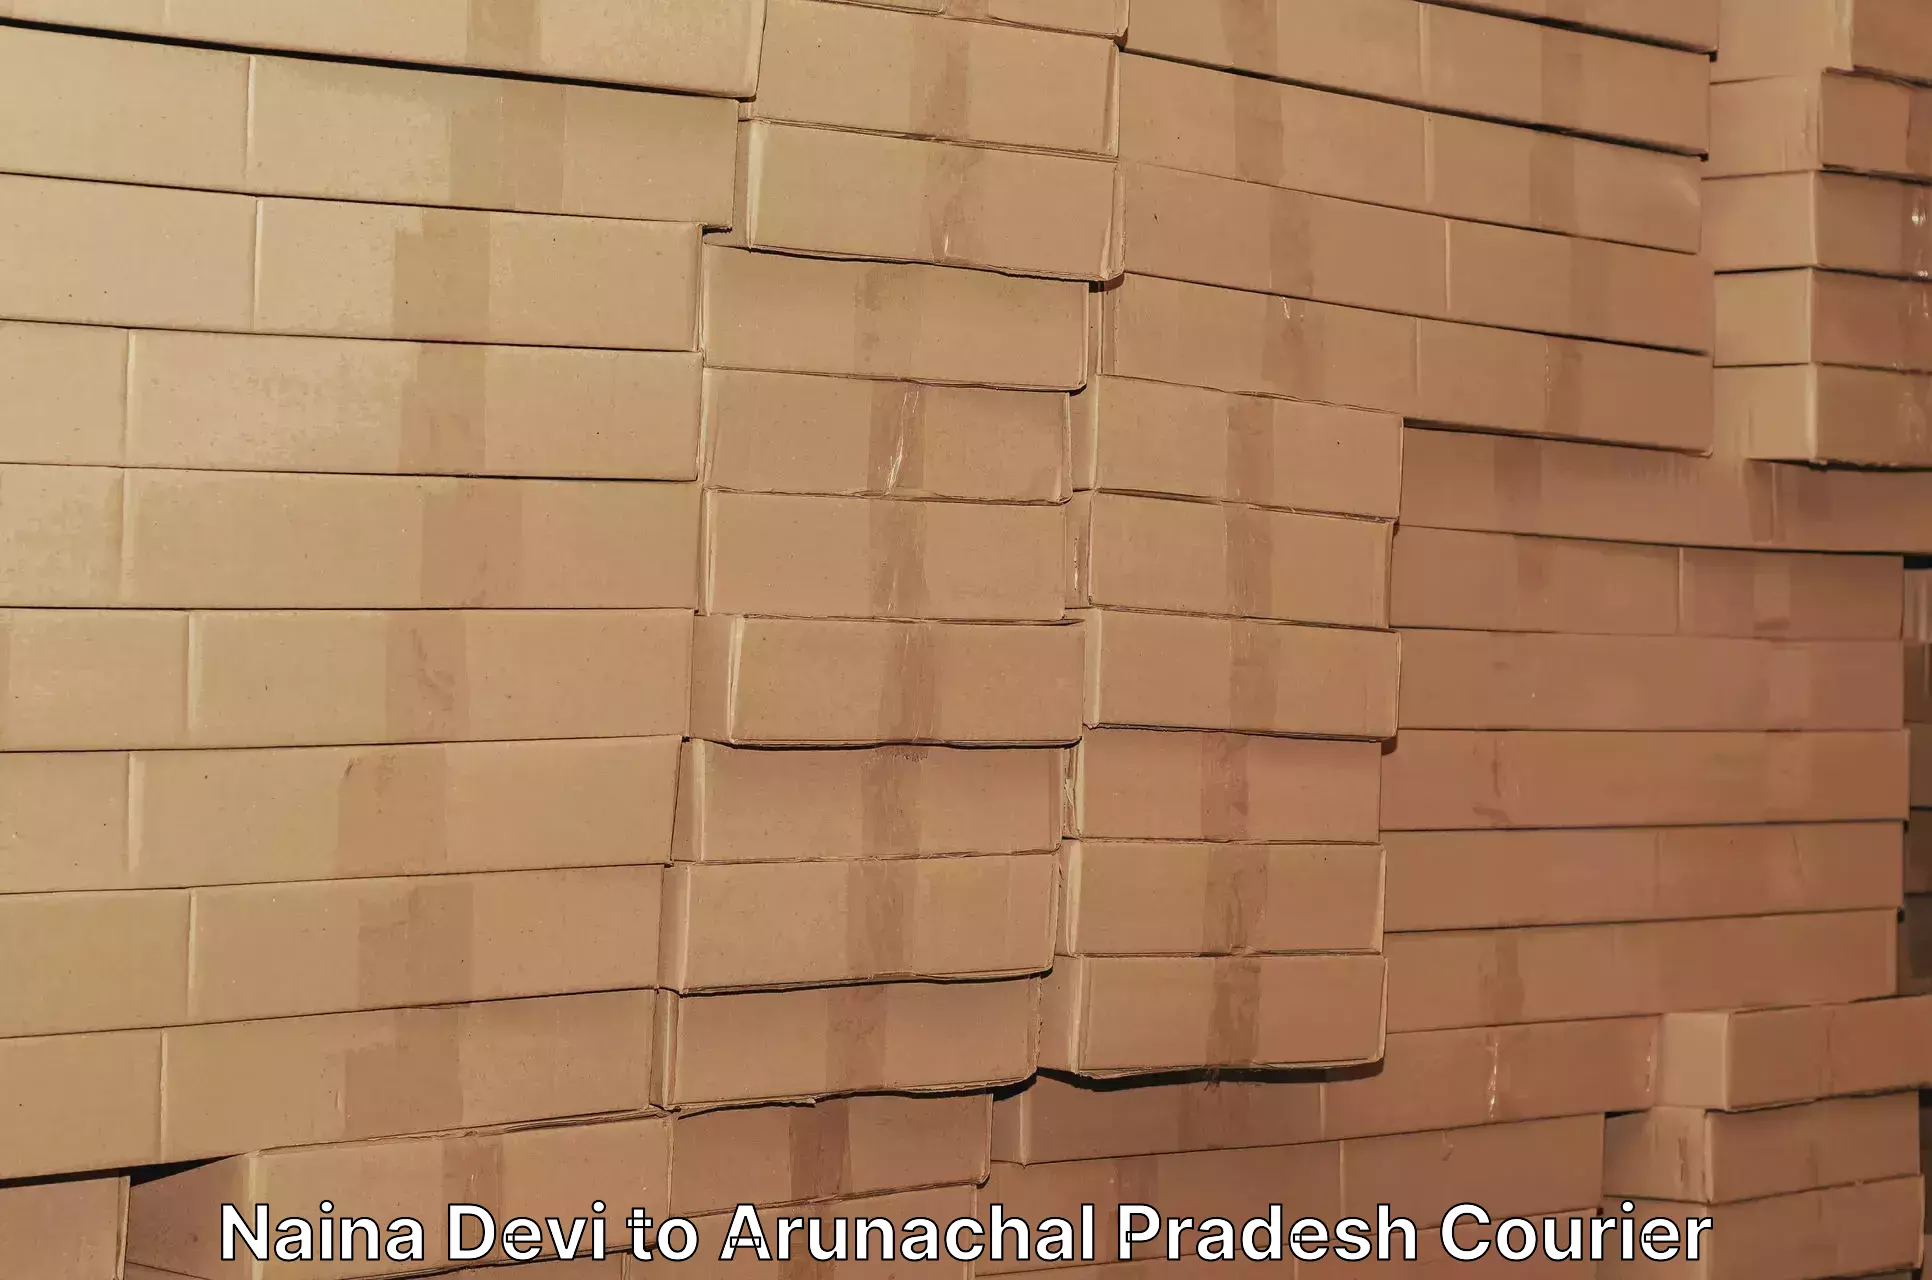 Express postal services Naina Devi to Arunachal Pradesh